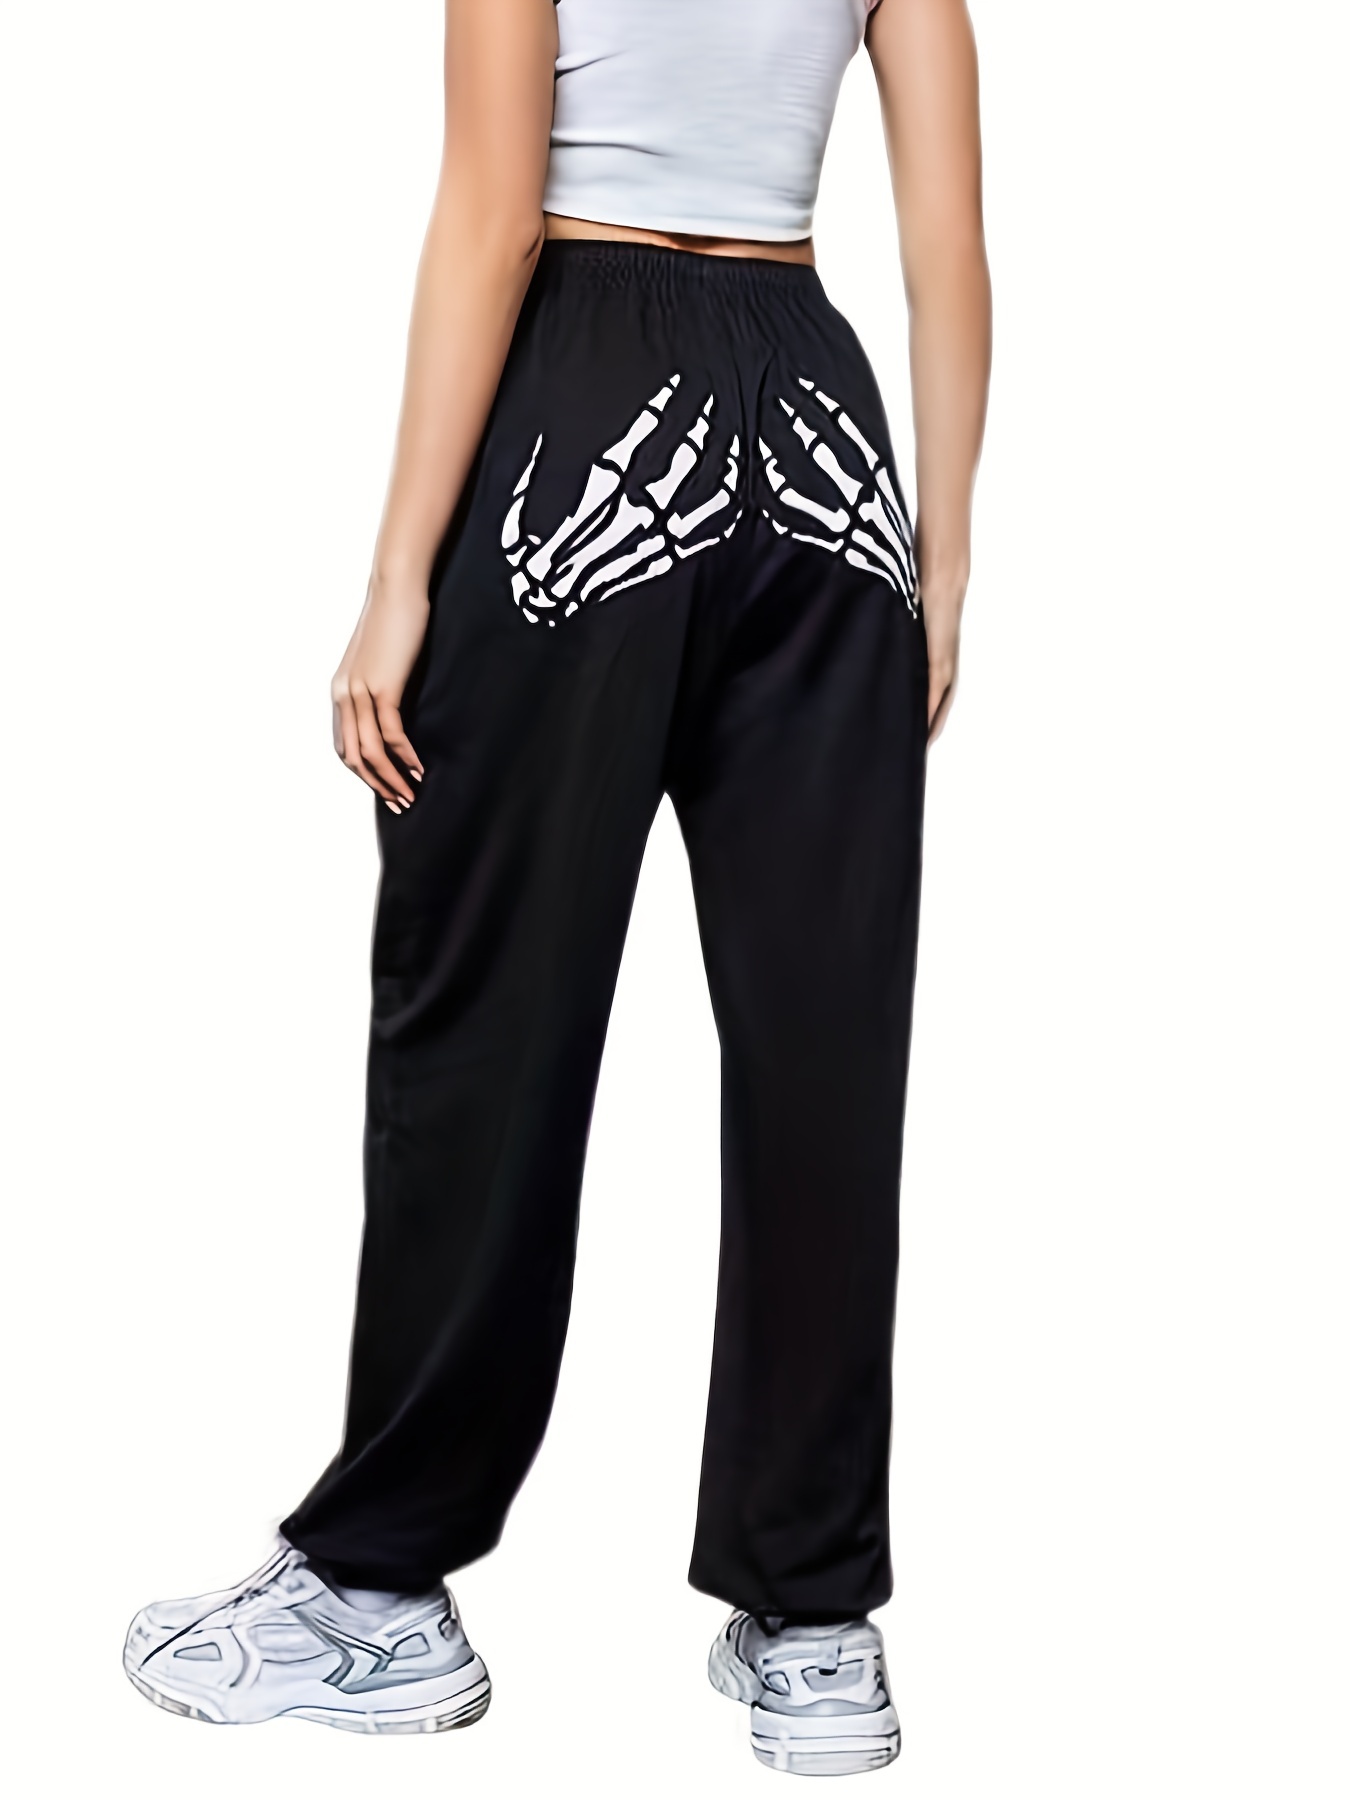 Thaisu Women's Halloween Lounge Pants Pajama Pants Sleepwear Skull Print  Elastic Waist Long Pants